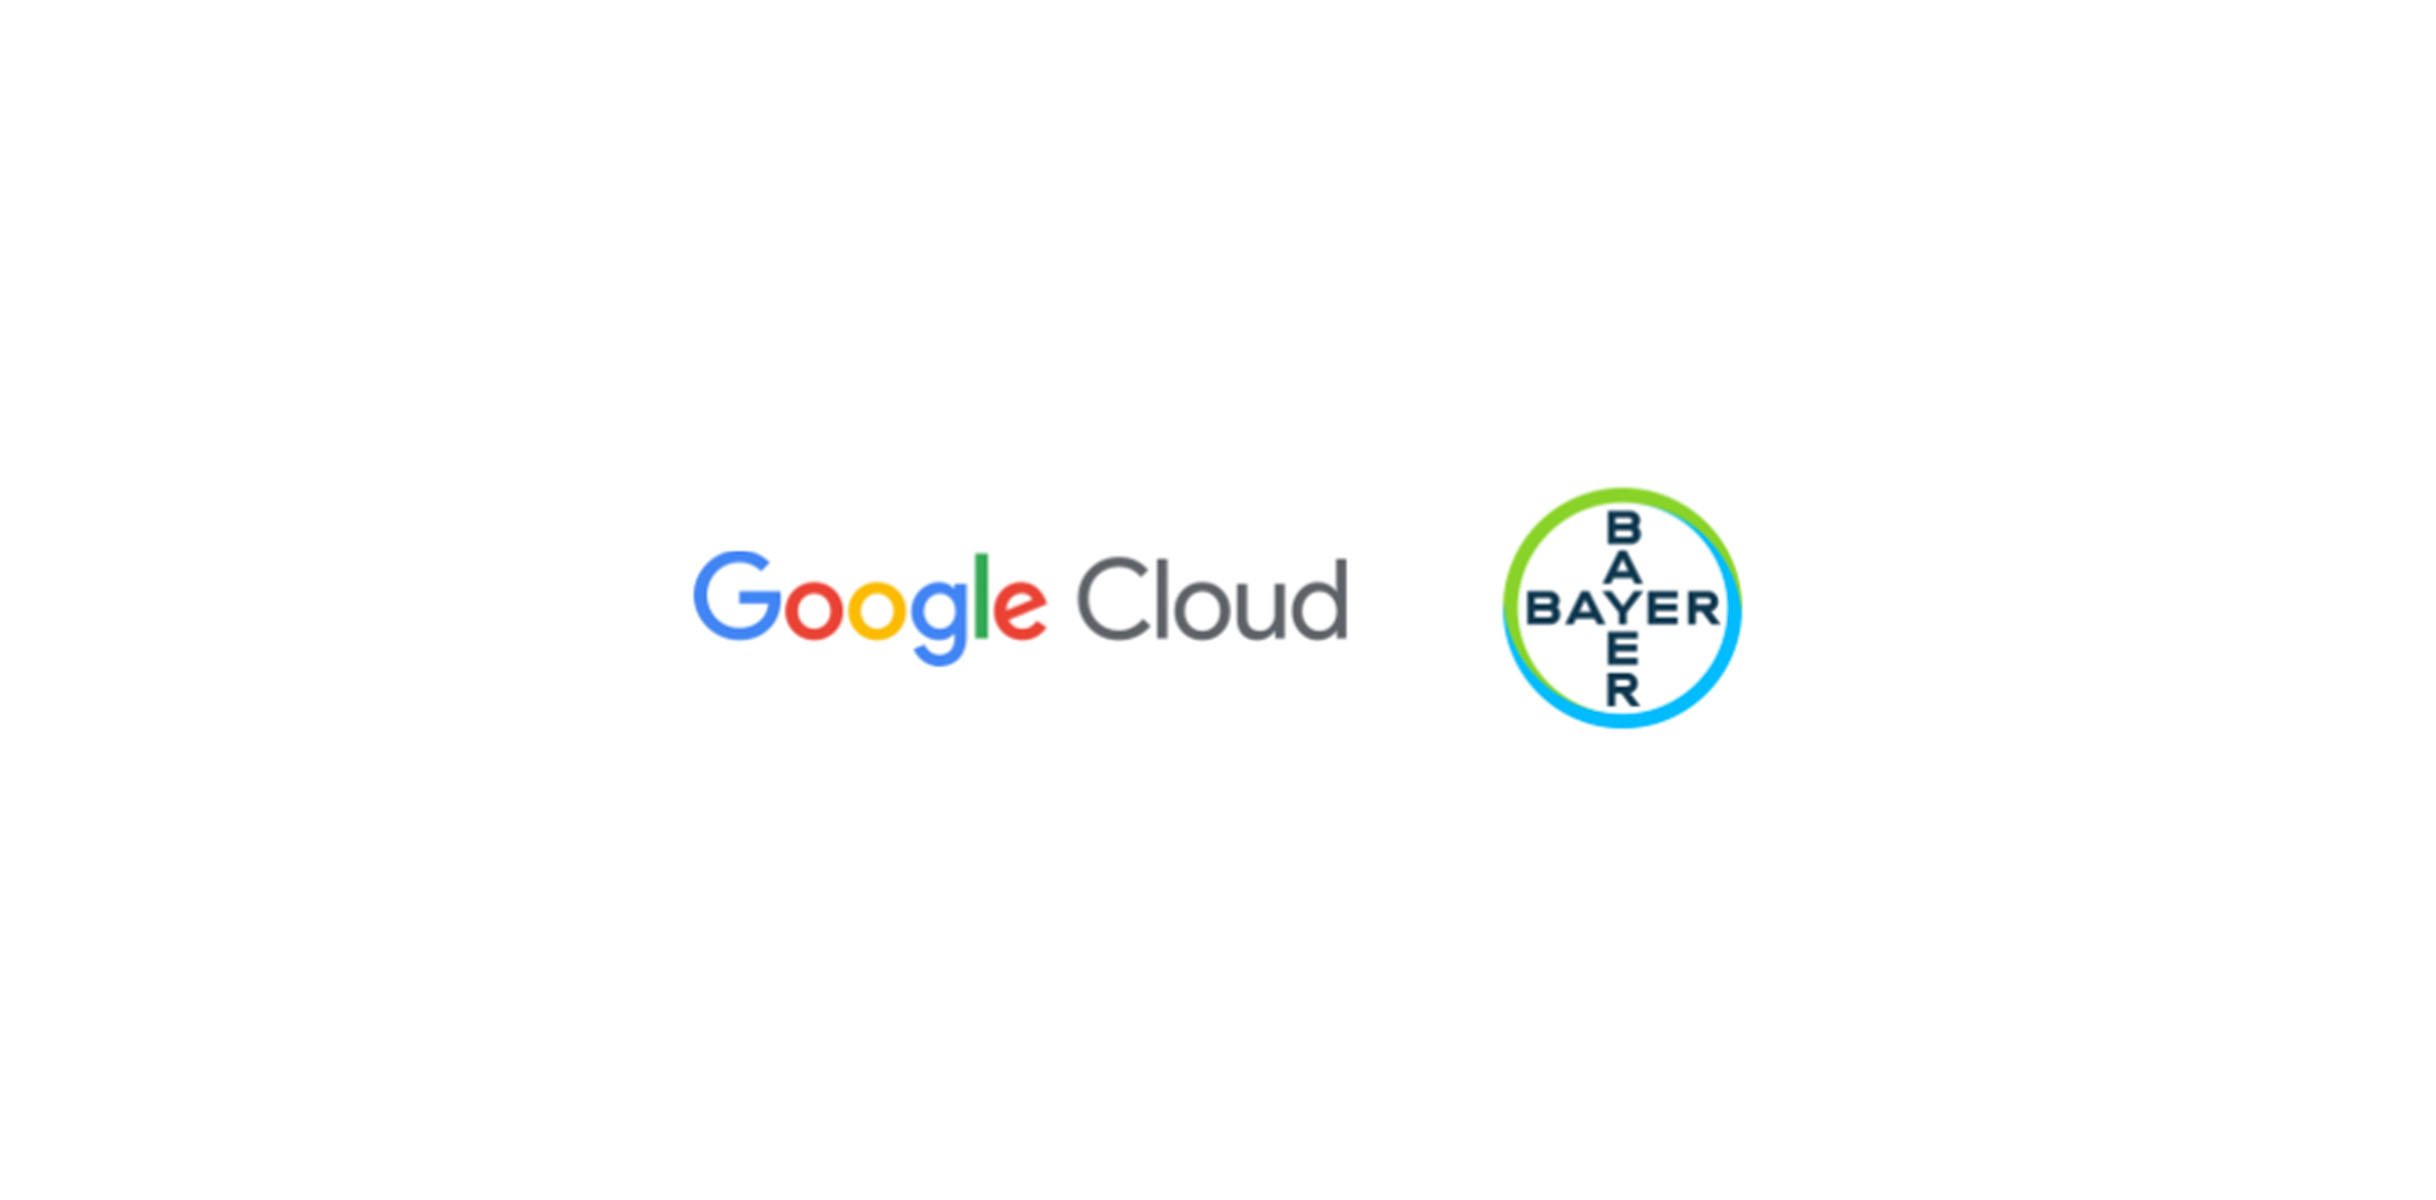 https://storage.googleapis.com/gweb-cloudblog-publish/images/Bayer_x_Google_Cloud.max-2500x2500.jpg